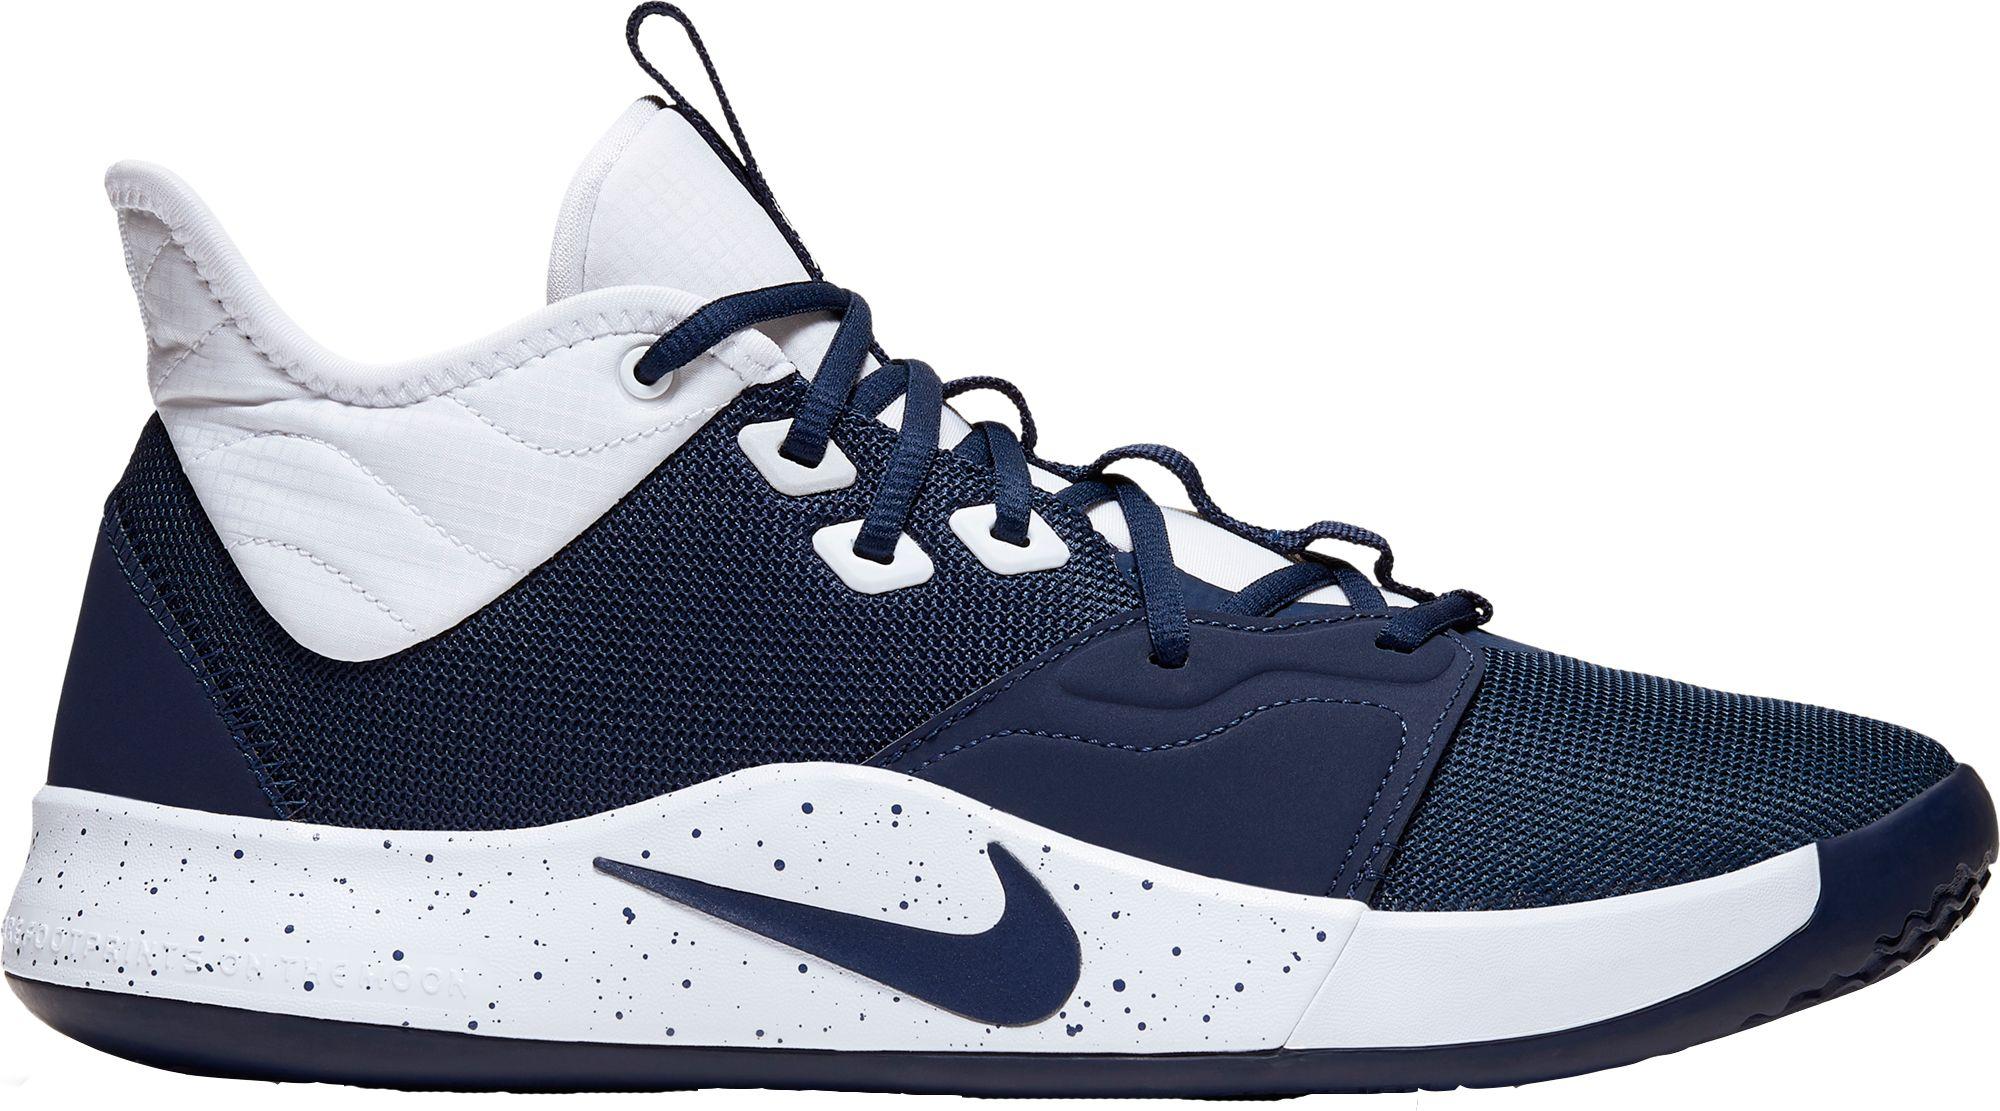 Nike Pg3 Basketball Shoes in Navy/White (Blue) for Men Lyst